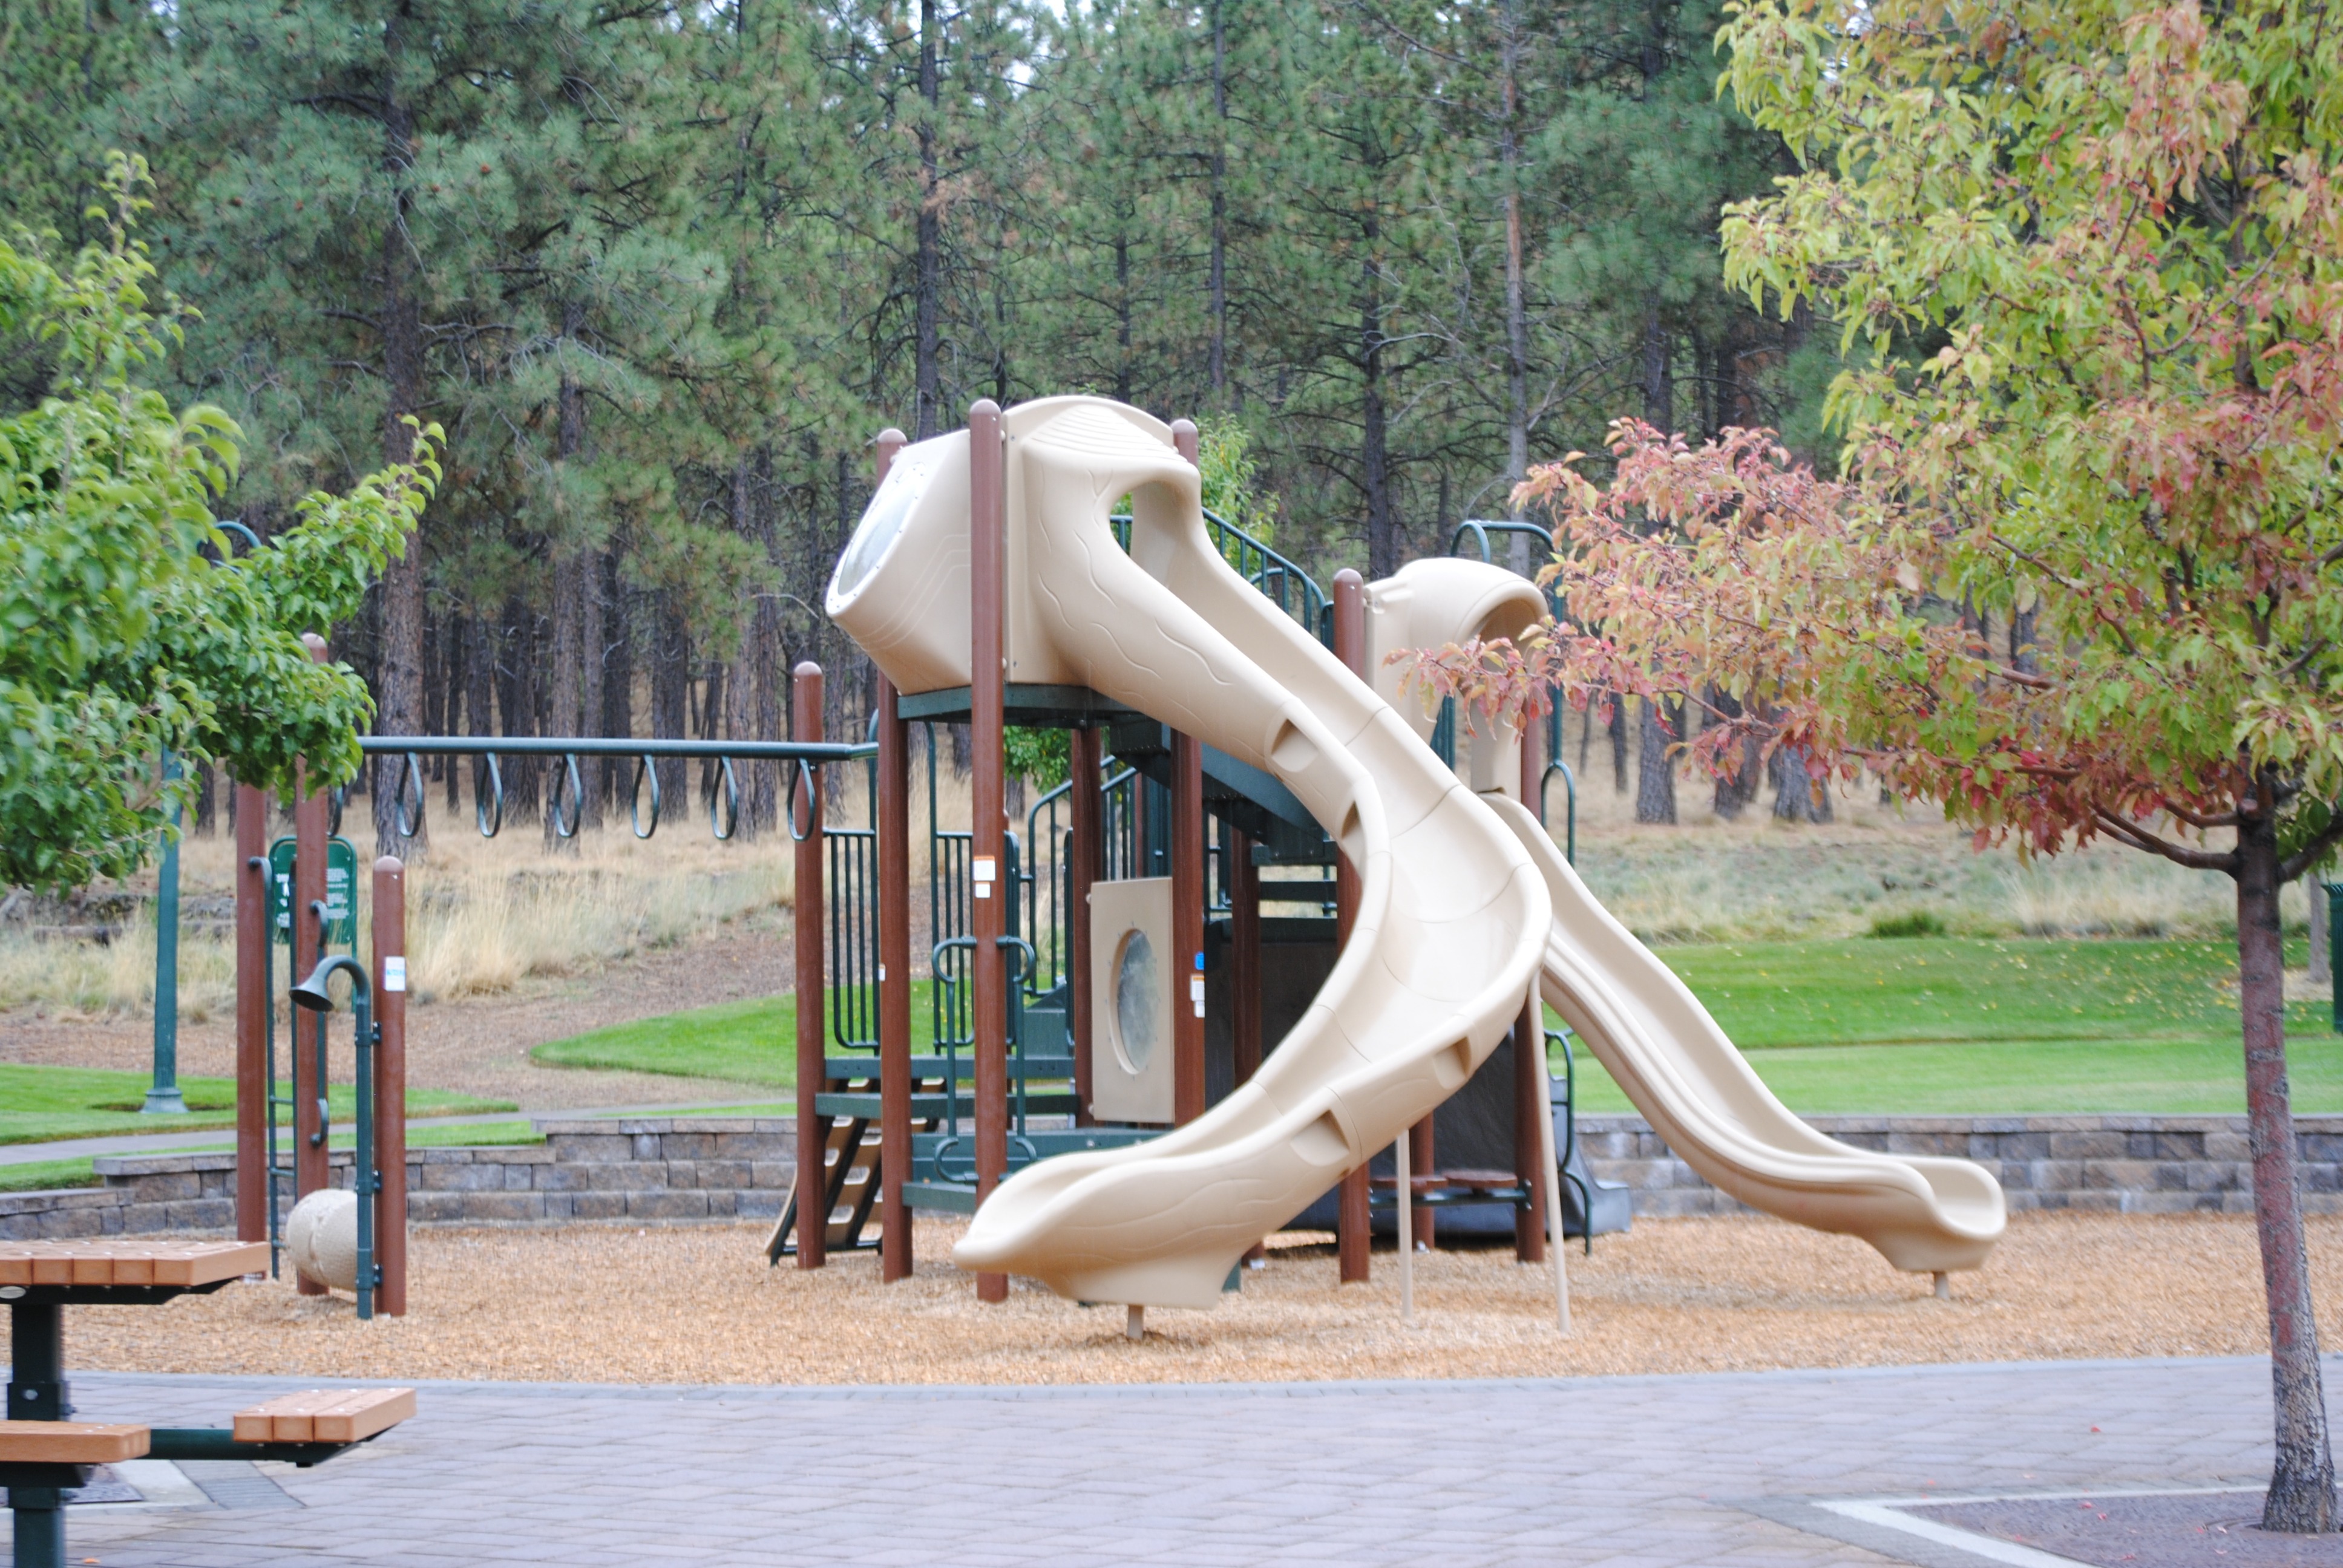 The playground at Quail Park